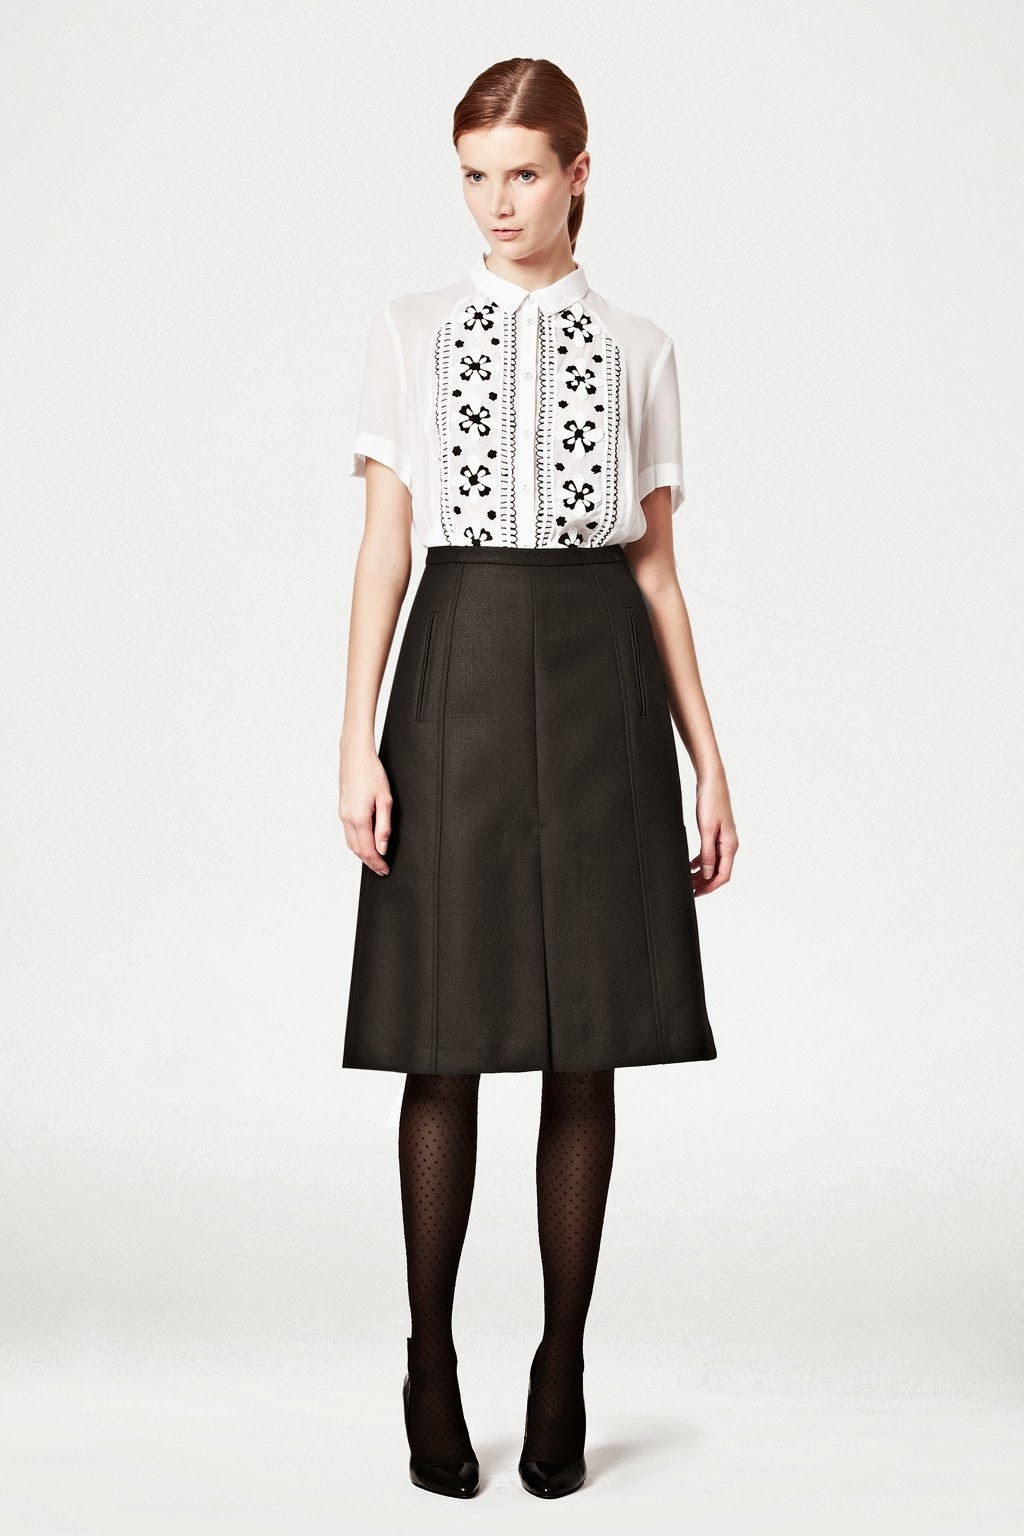 Fashion feVer: Wool Skirt